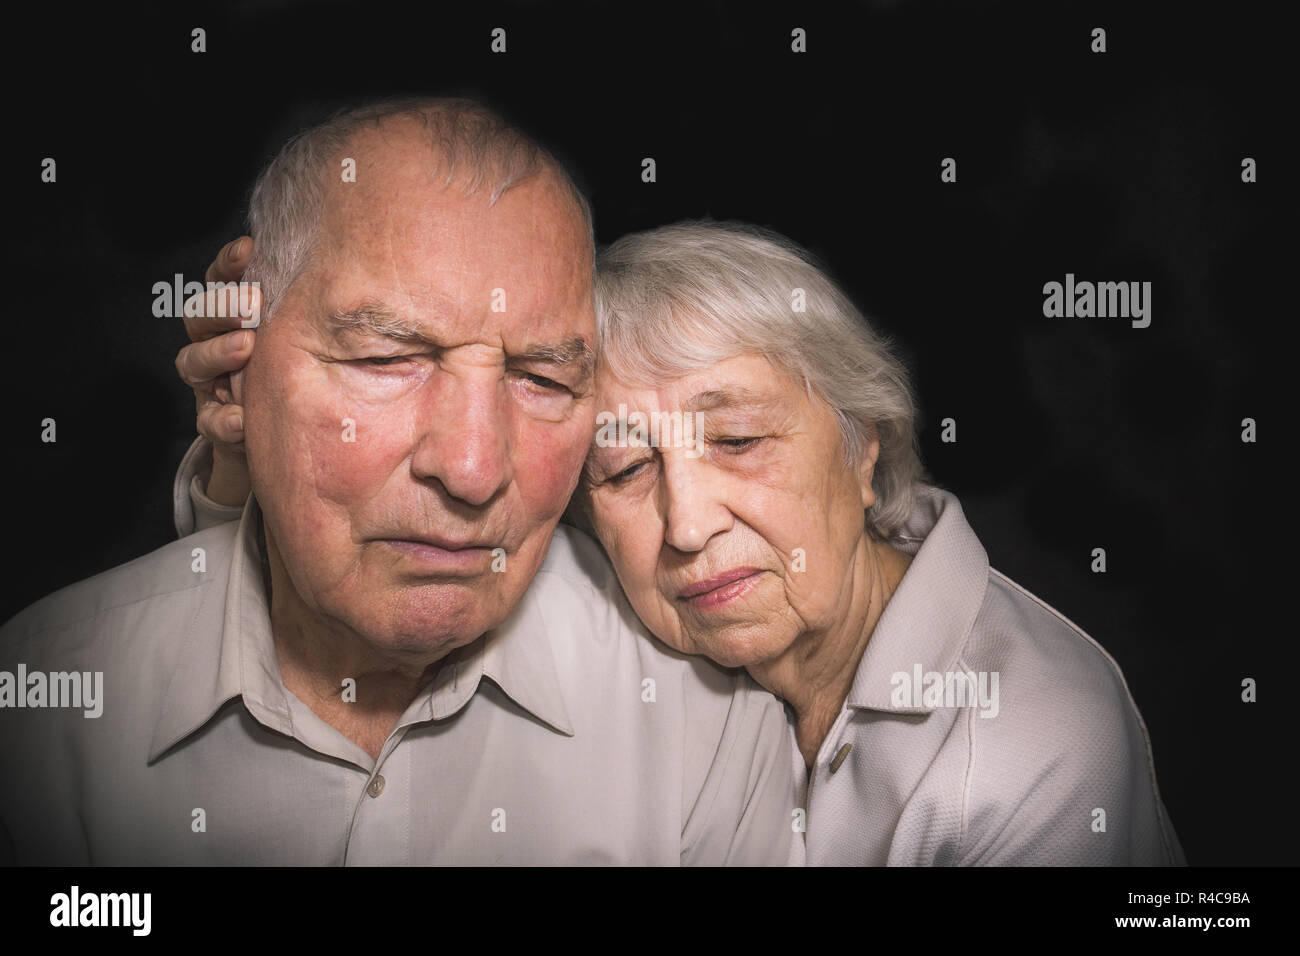 Sad elderly couple on a black background Stock Photo